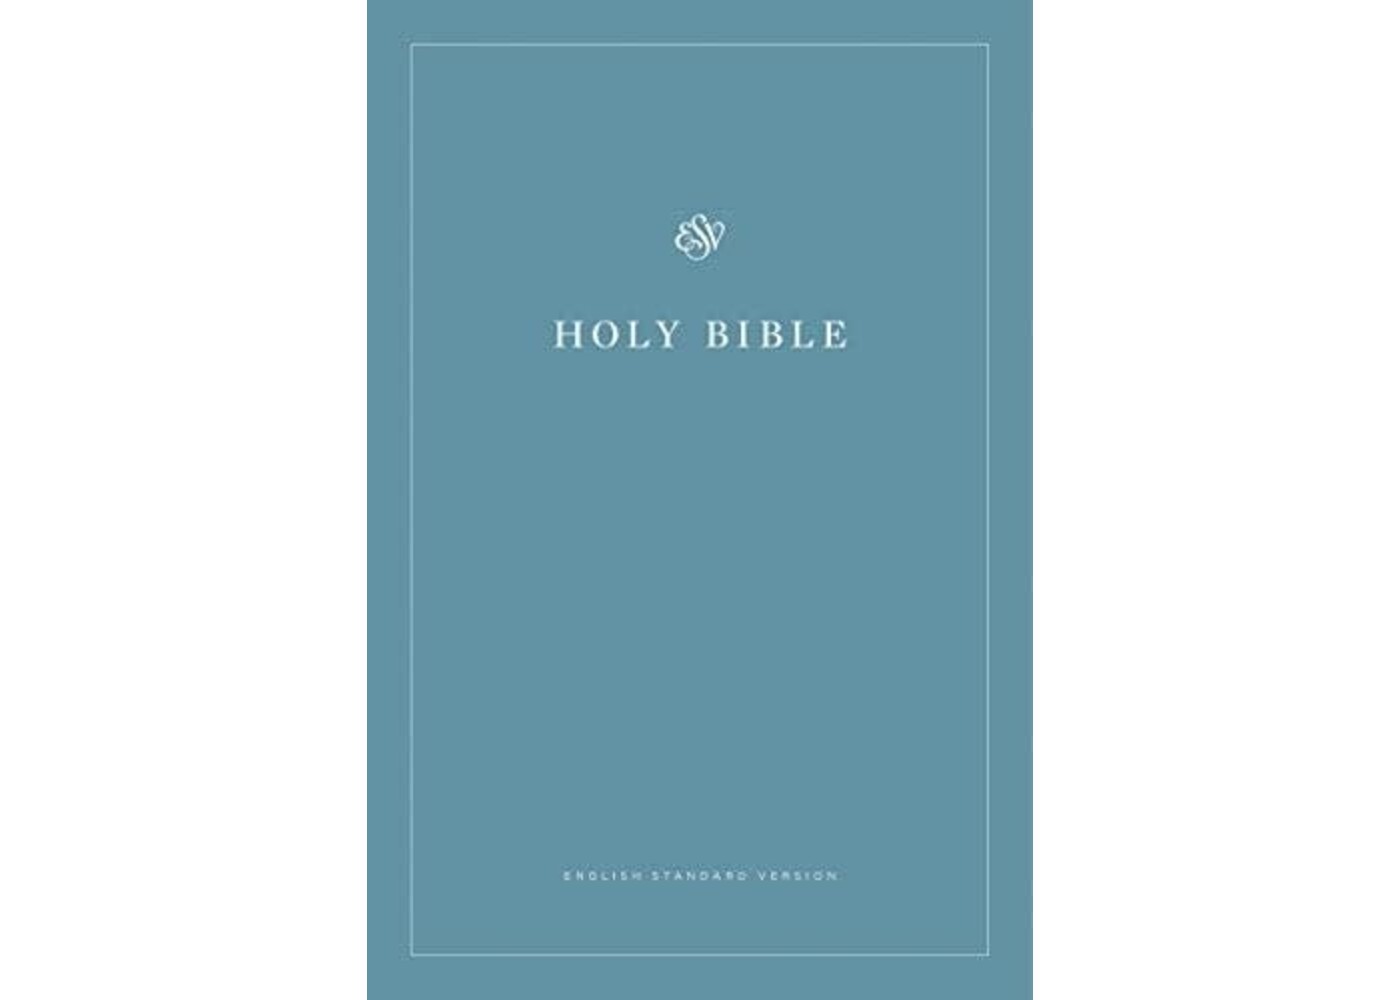 CROSSWAY HOLY BIBLE ESV